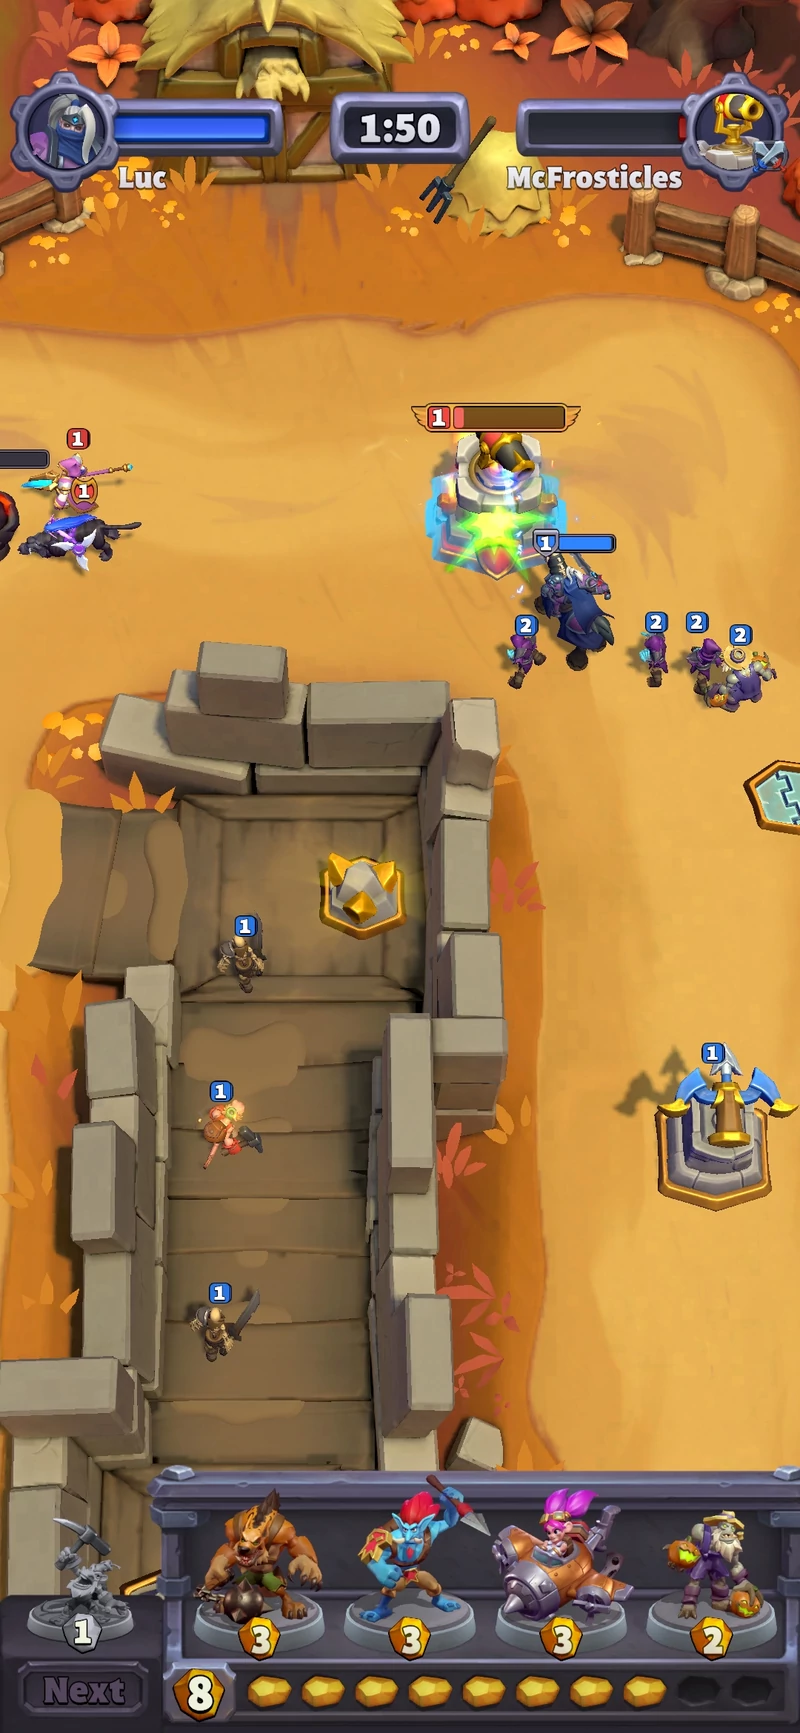 Warcraft Arclight Rumble - screenshot z gry (wersja na Androida)